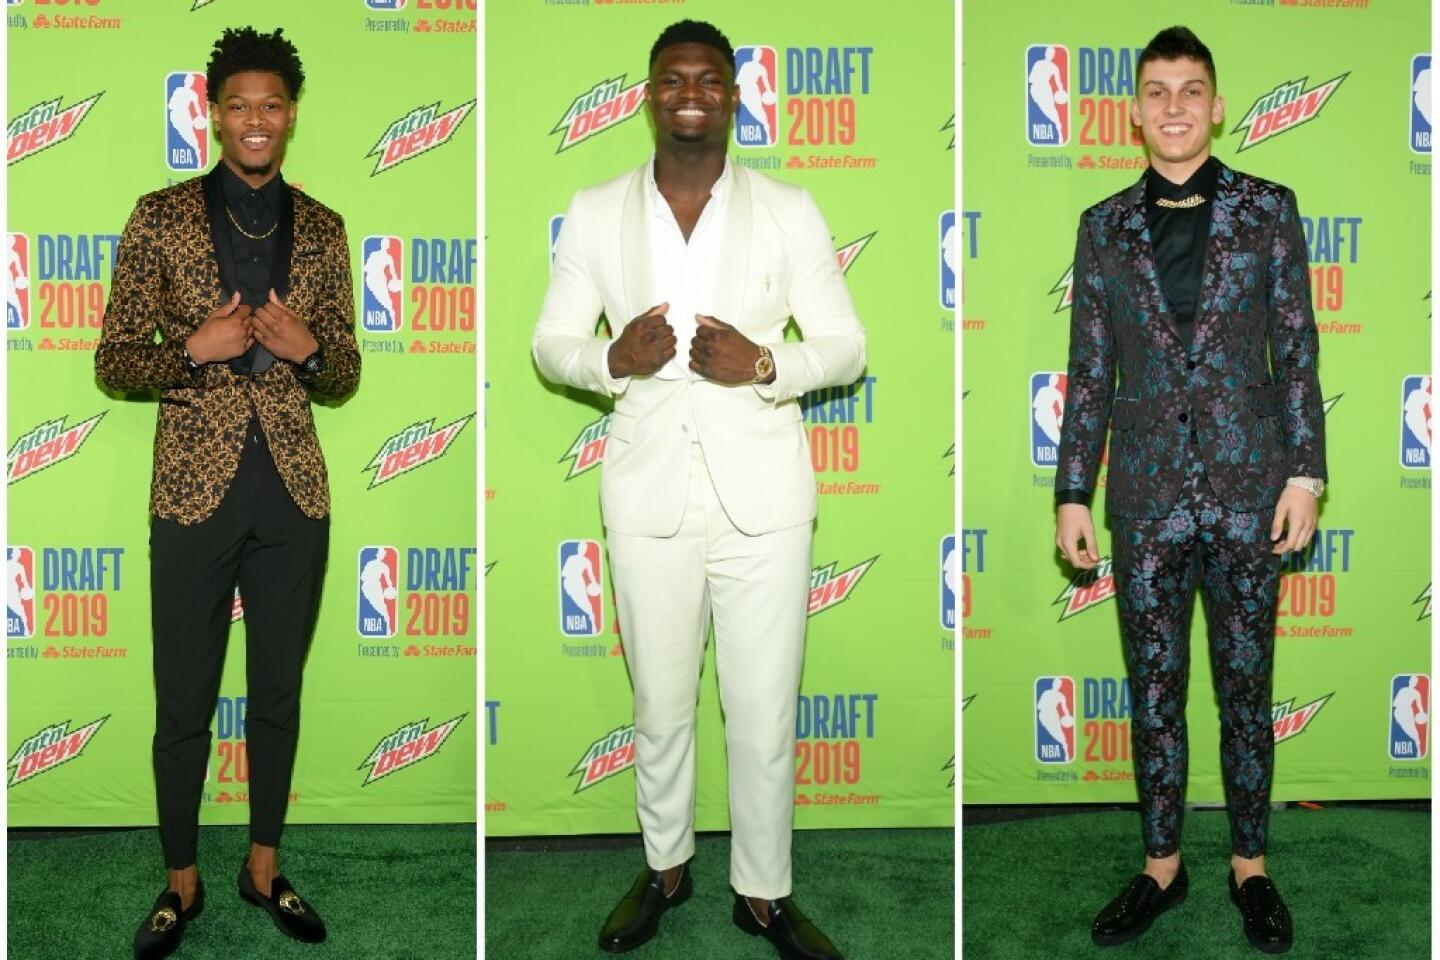 2019 NBA Draft style -- arrivals